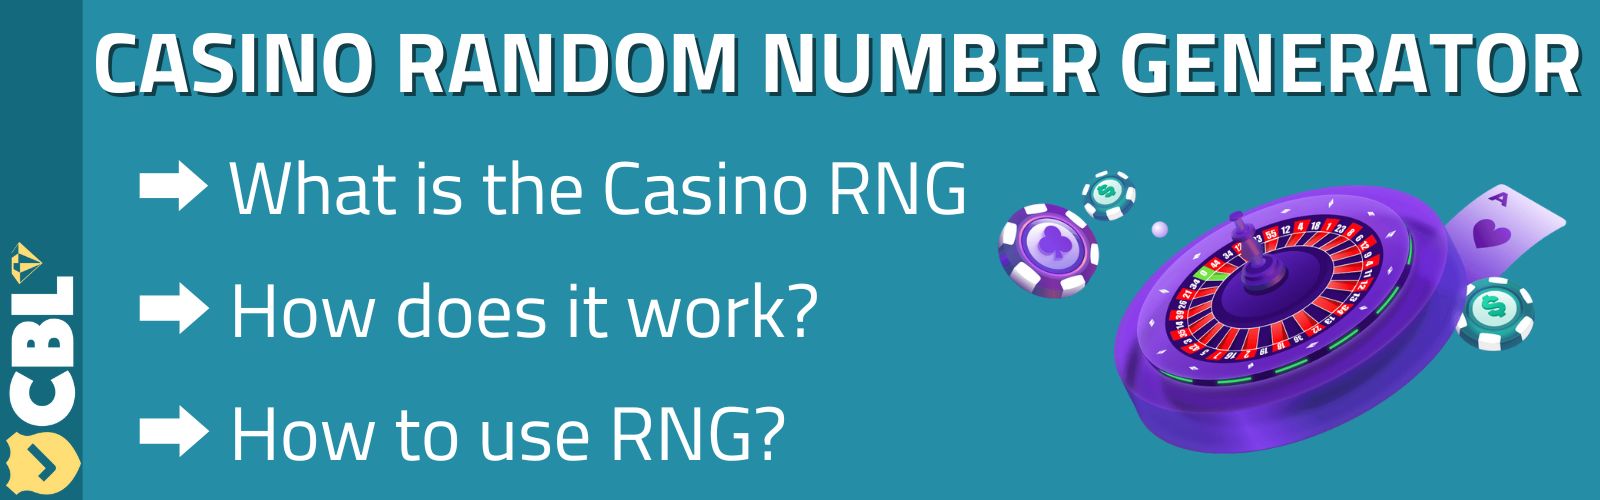 casino random number generator